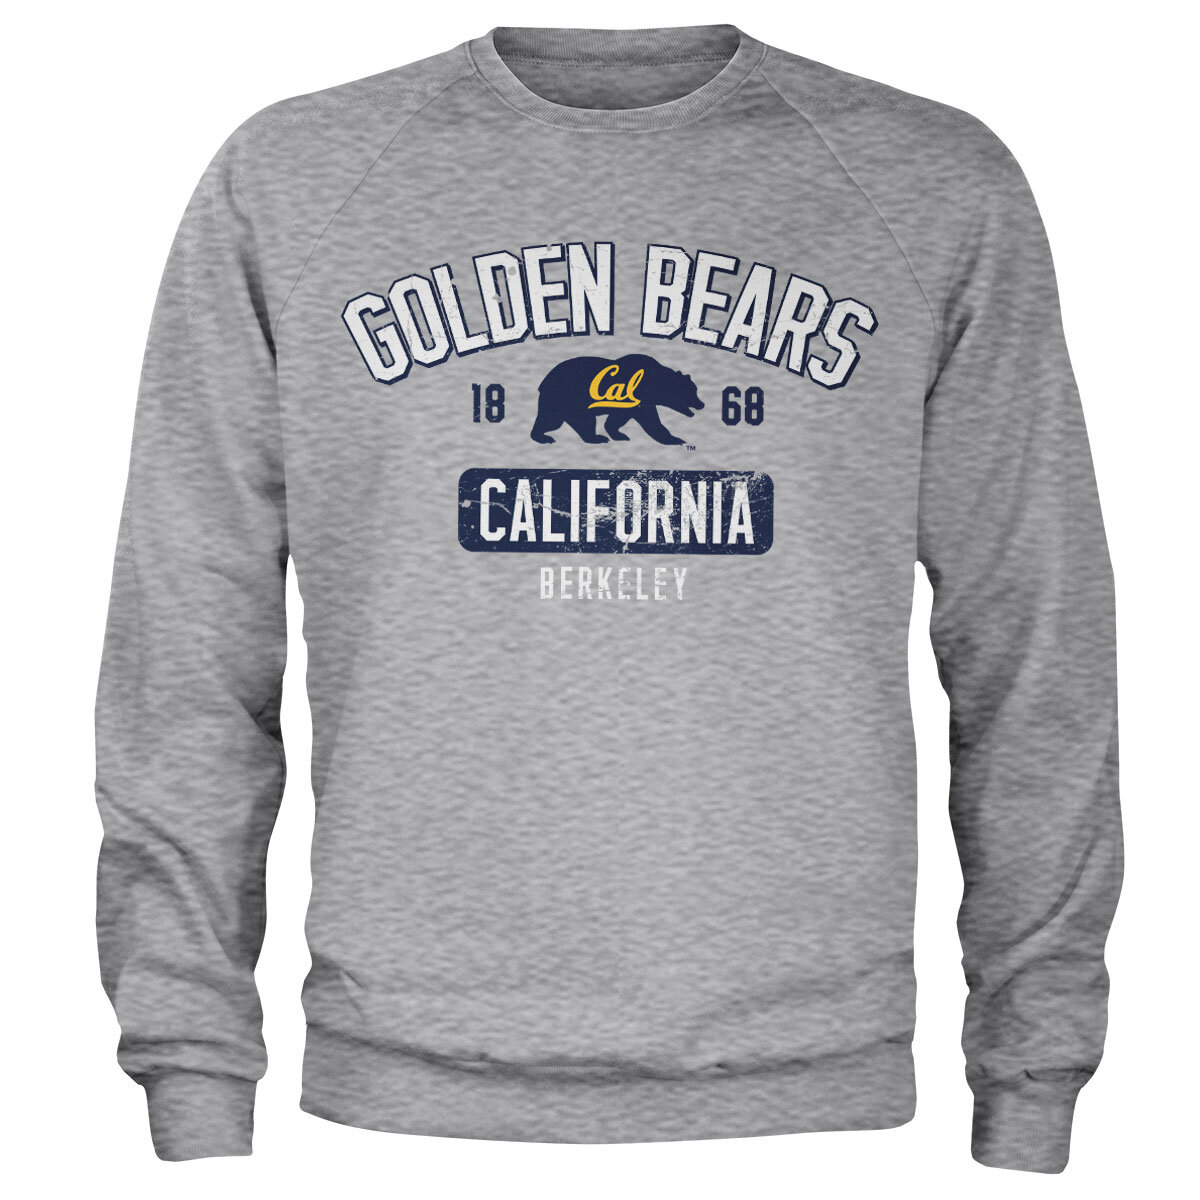 California Golden Bears Washed Sweatshirt